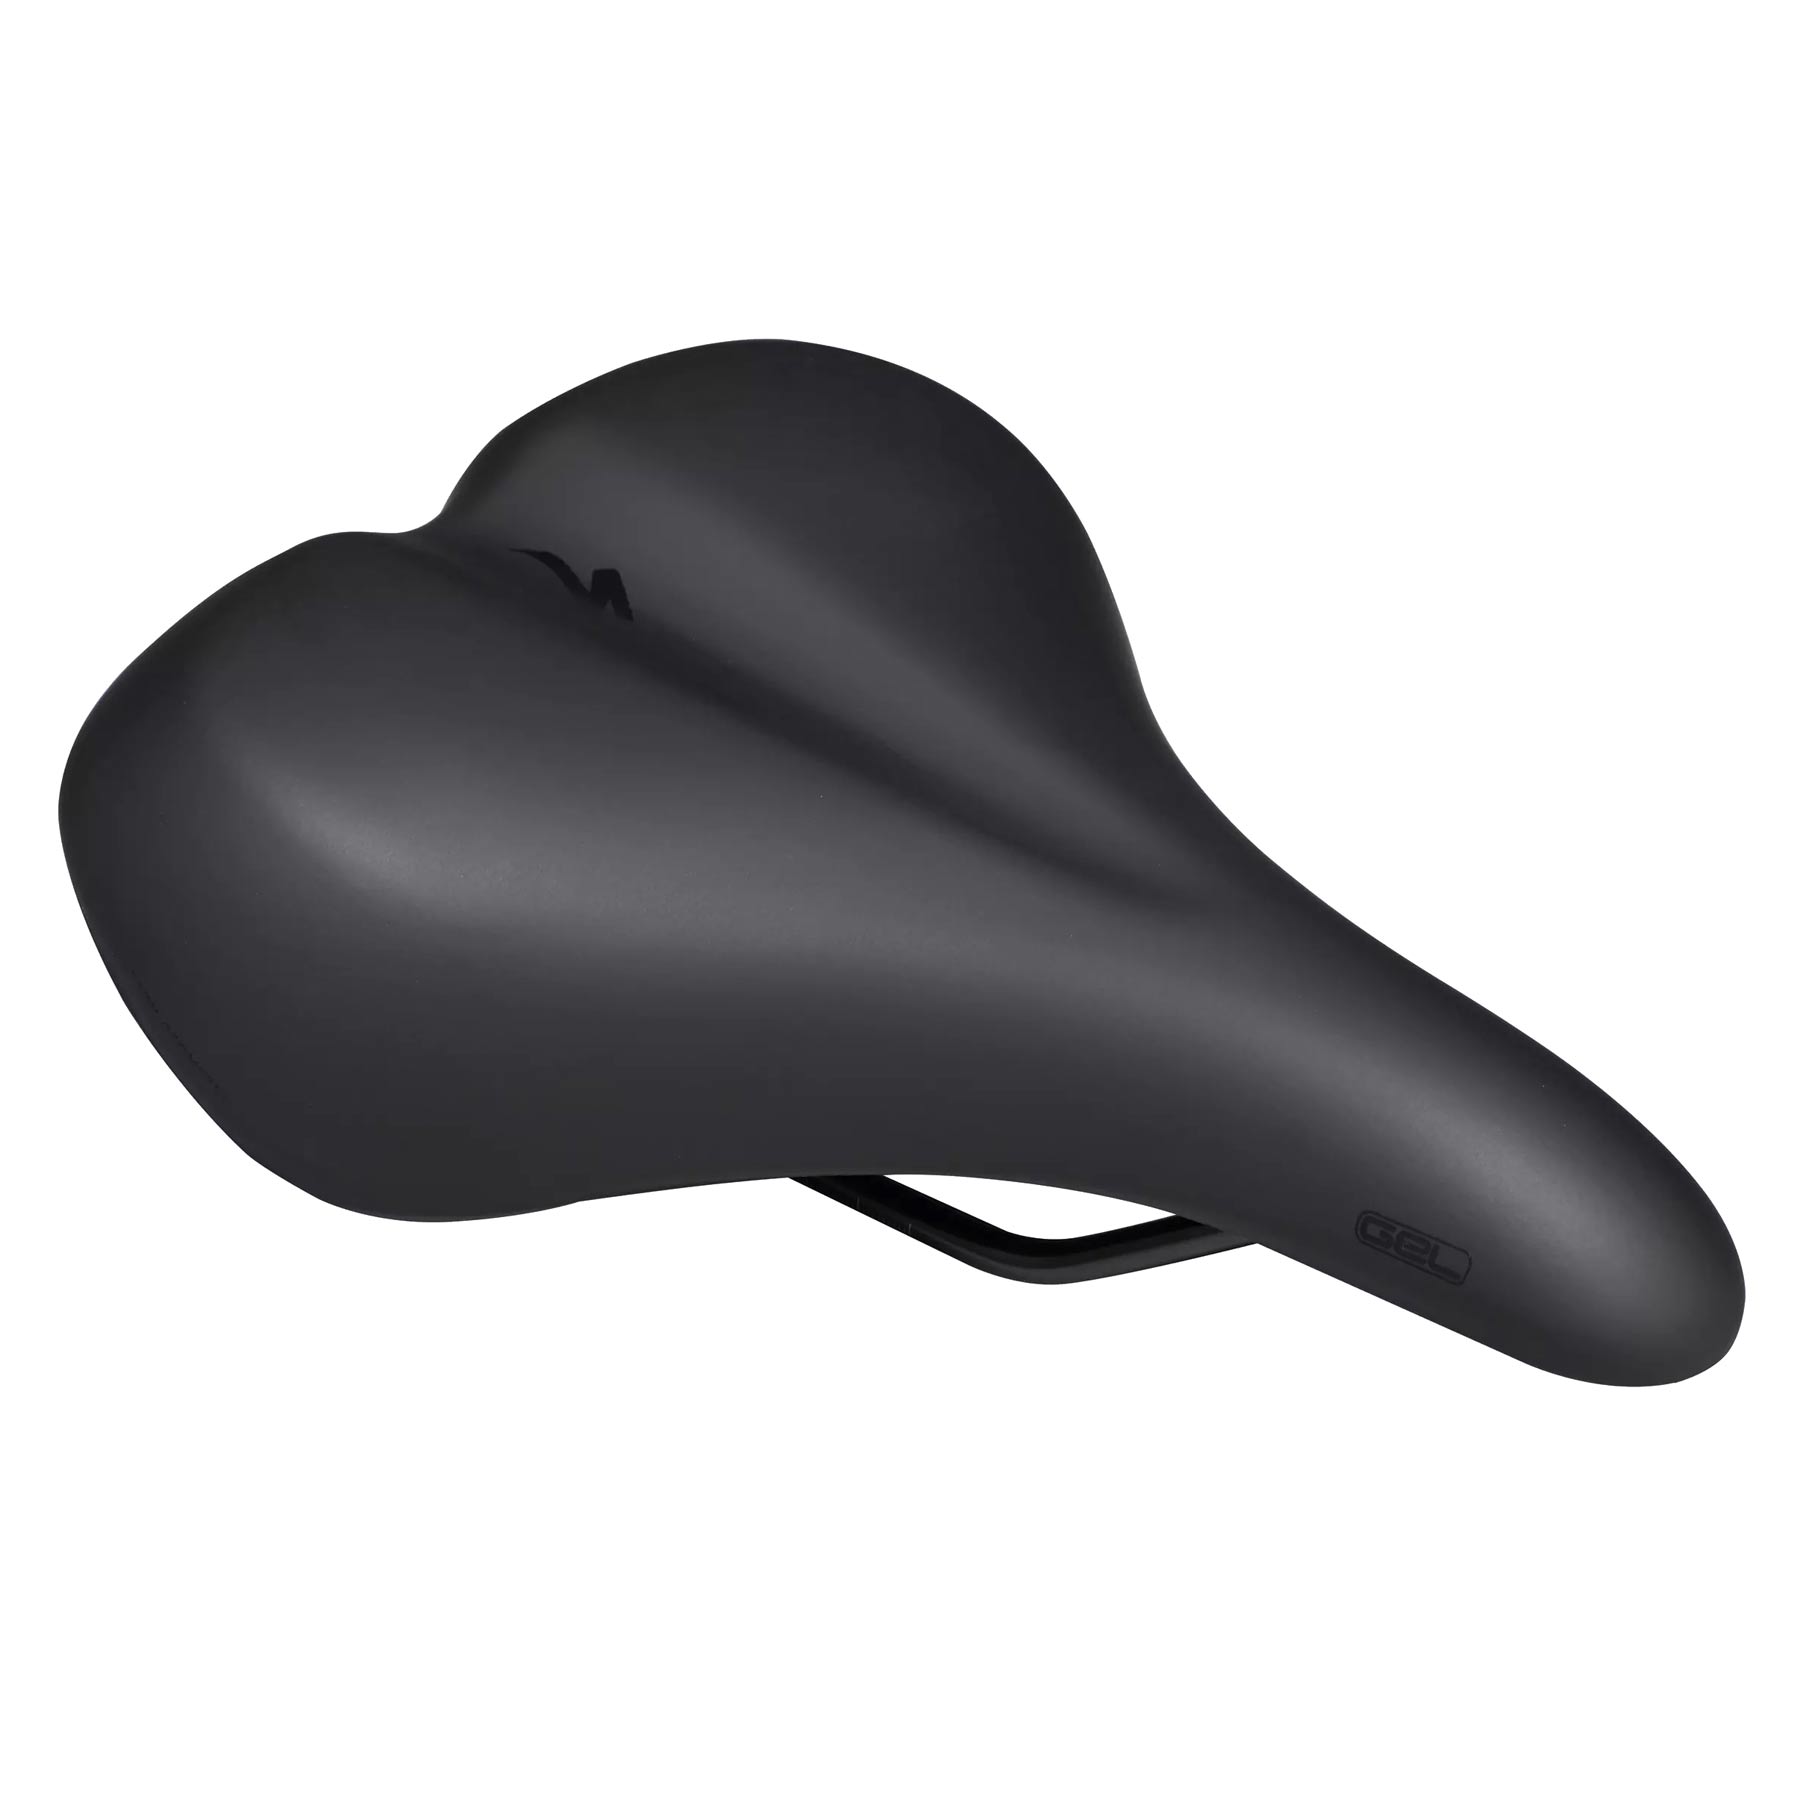 Productfoto van Specialized Body Geometry Comfort Gel Saddle - Black